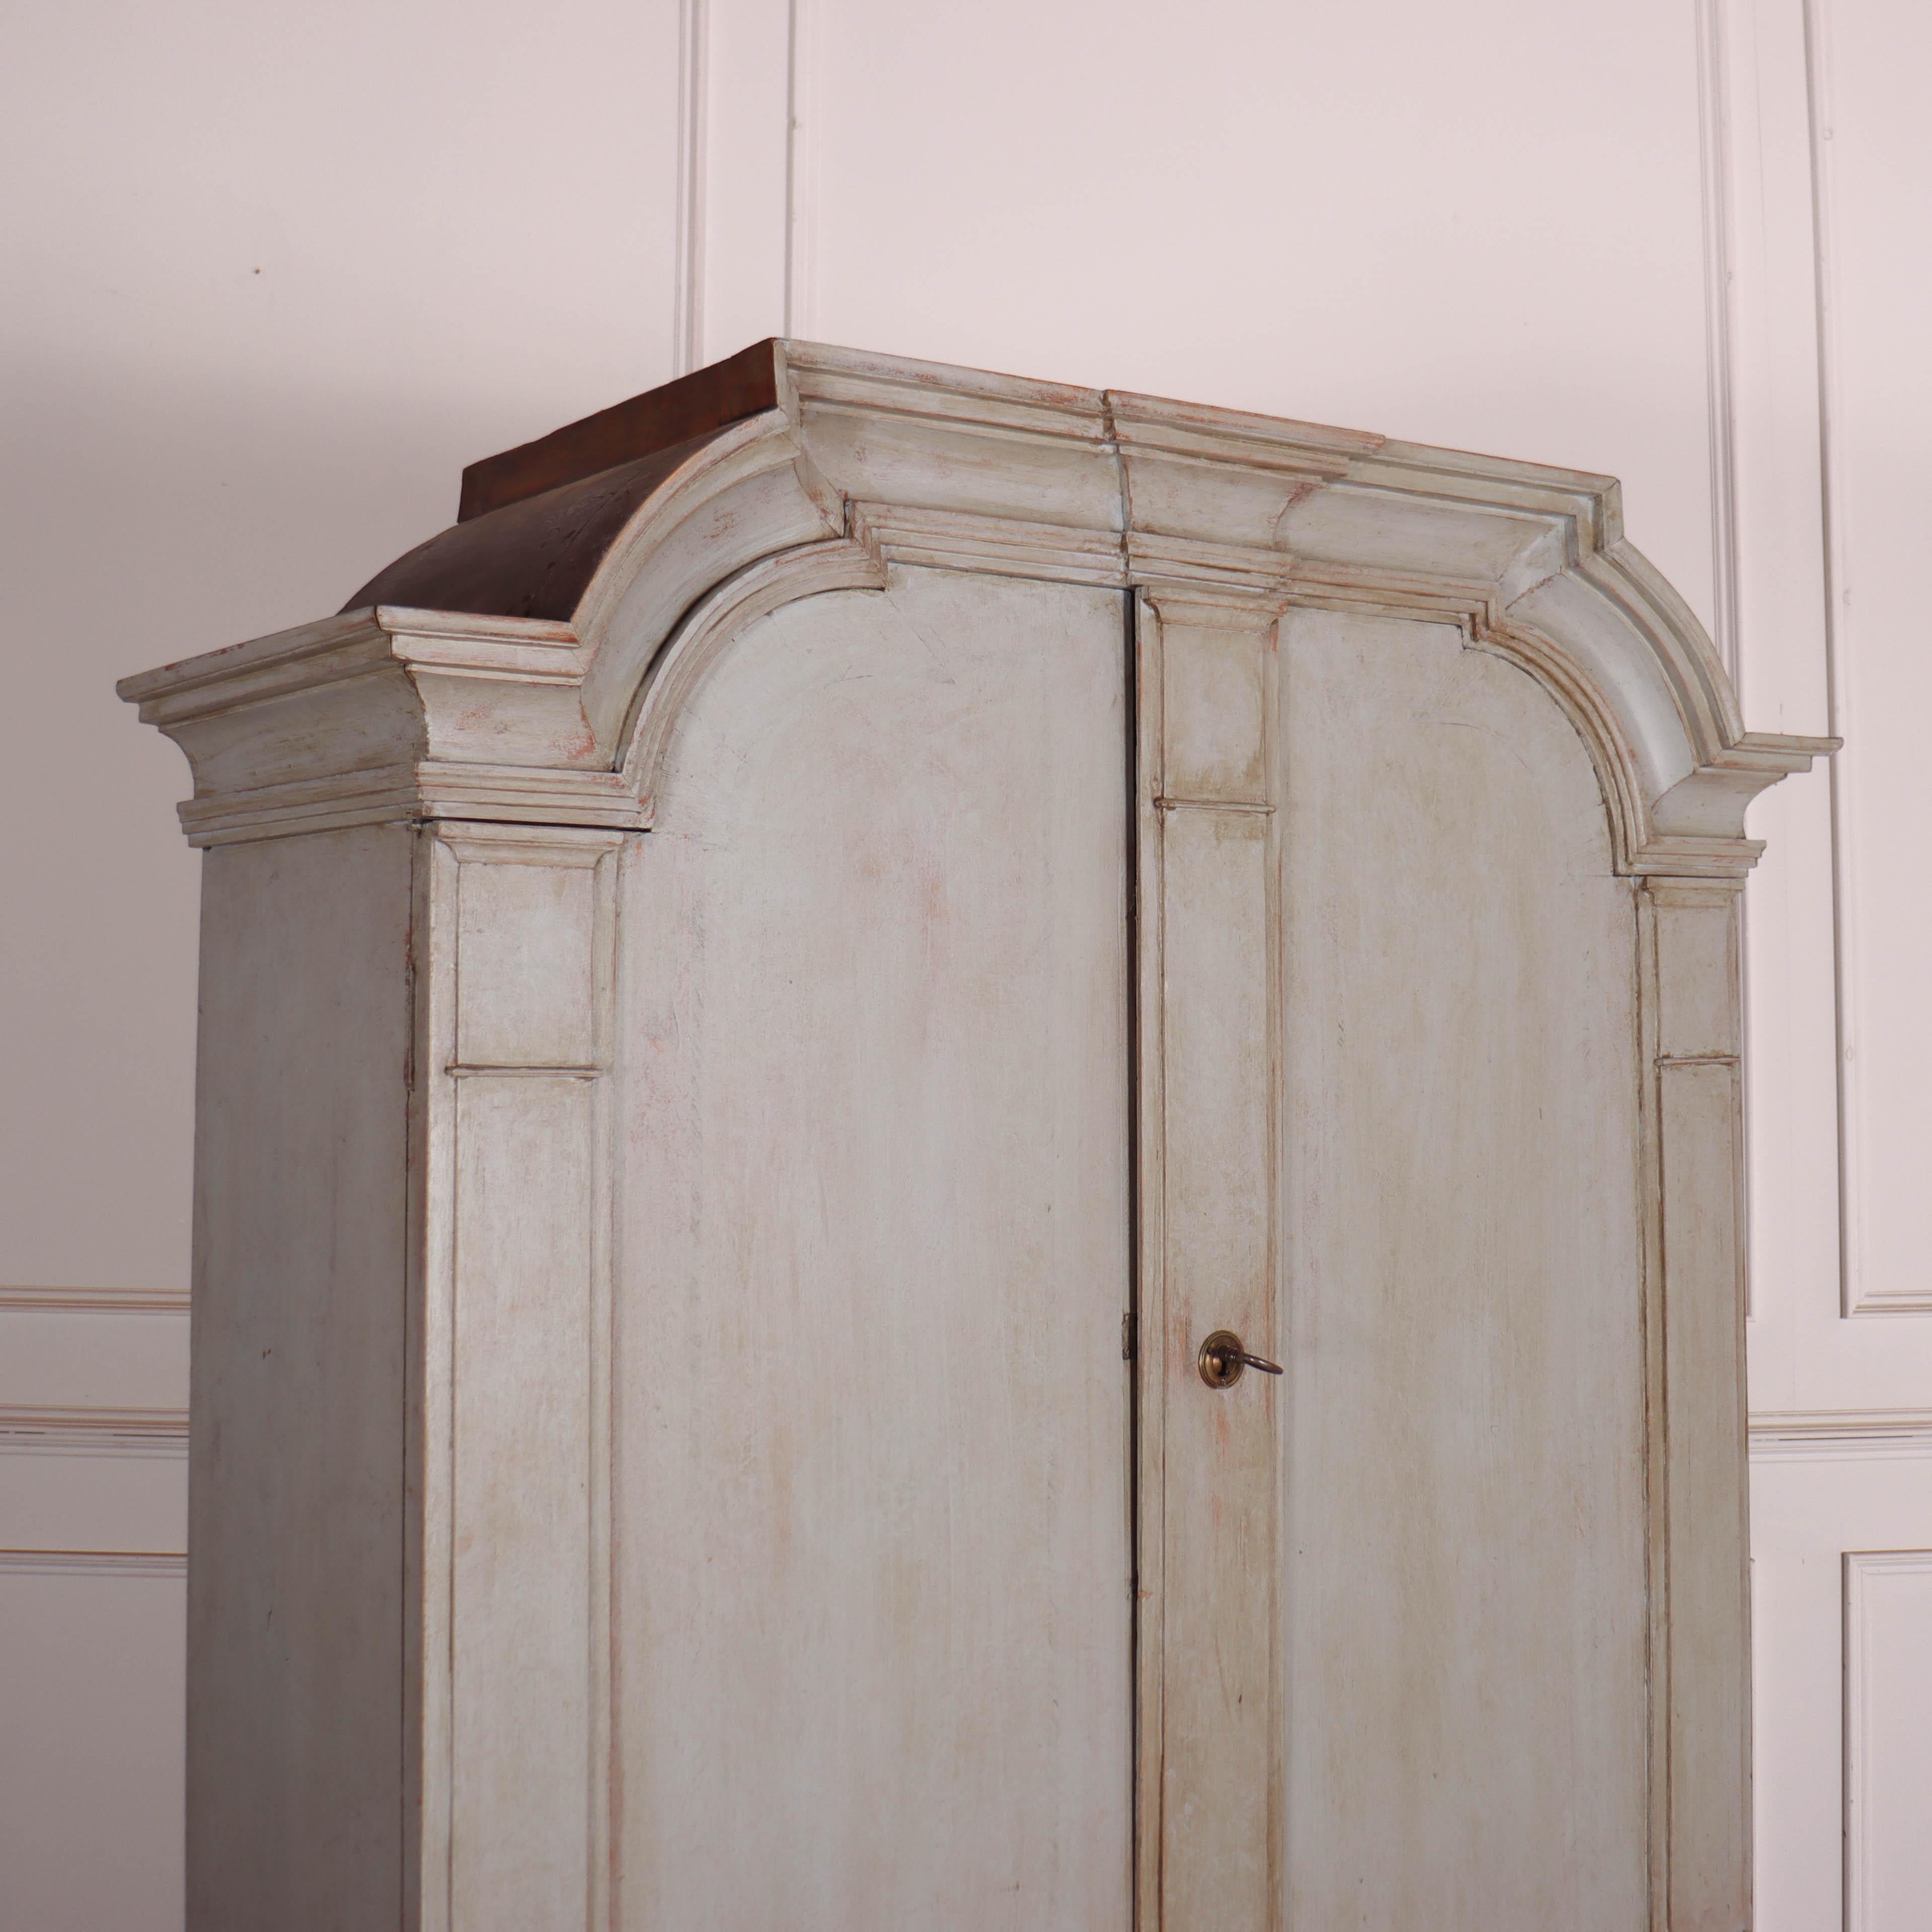 Early 19th century Swedish painted linen cupboard. 1820.

Internal shelf depth is 13.5